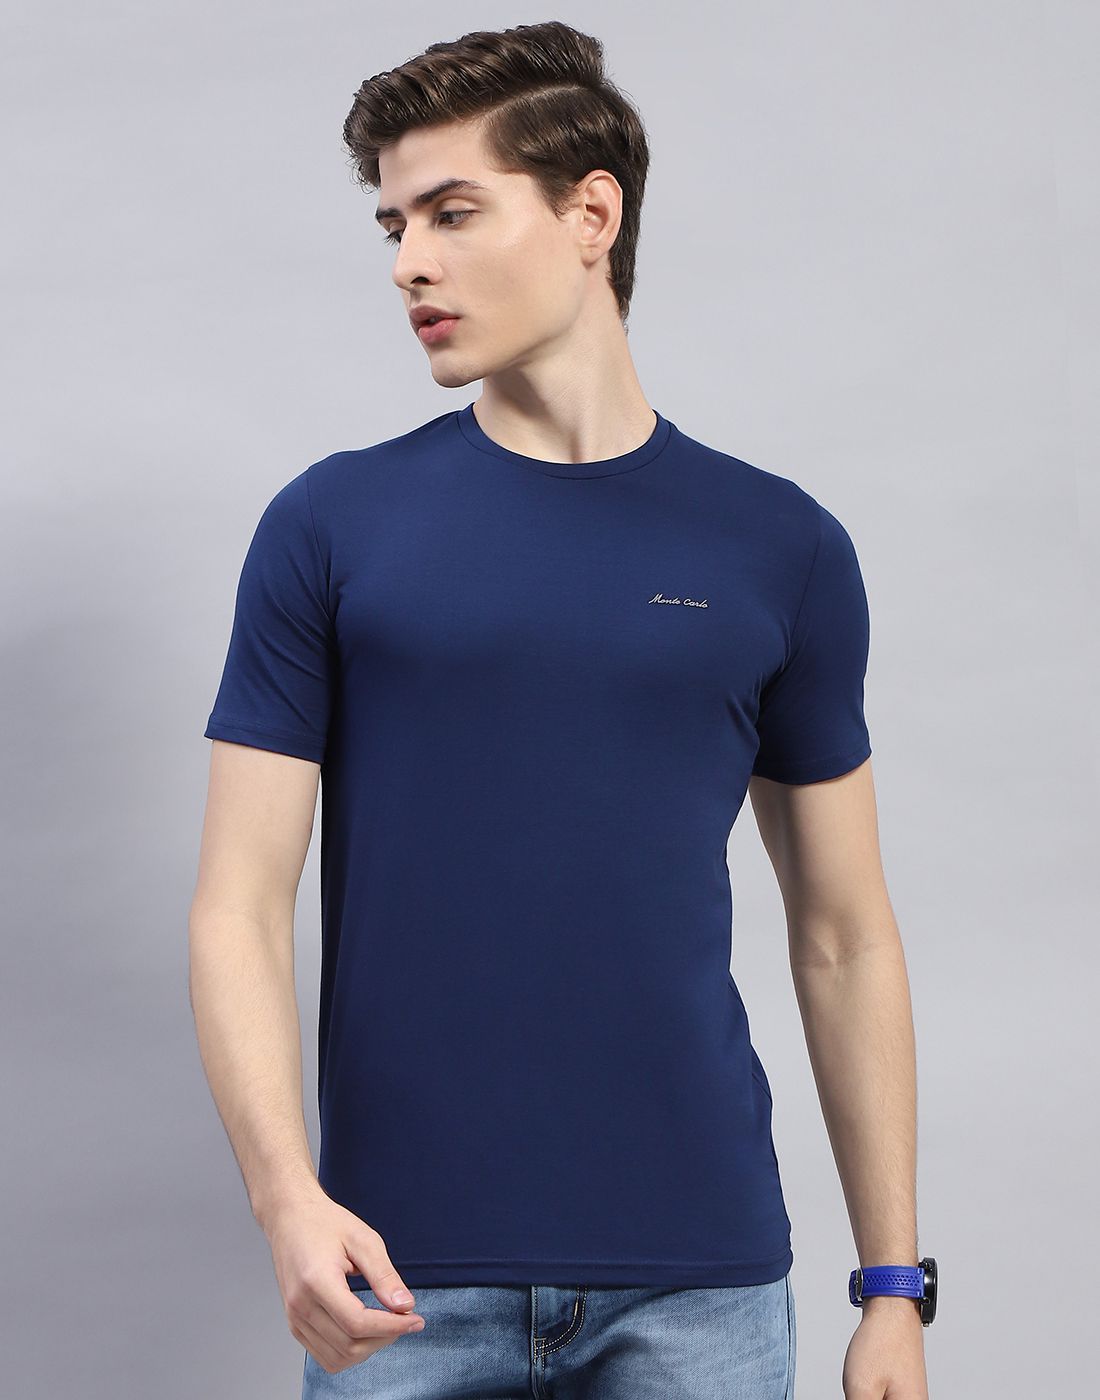     			Monte Carlo Cotton Blend Regular Fit Solid Half Sleeves Men's T-Shirt - Blue ( Pack of 1 )